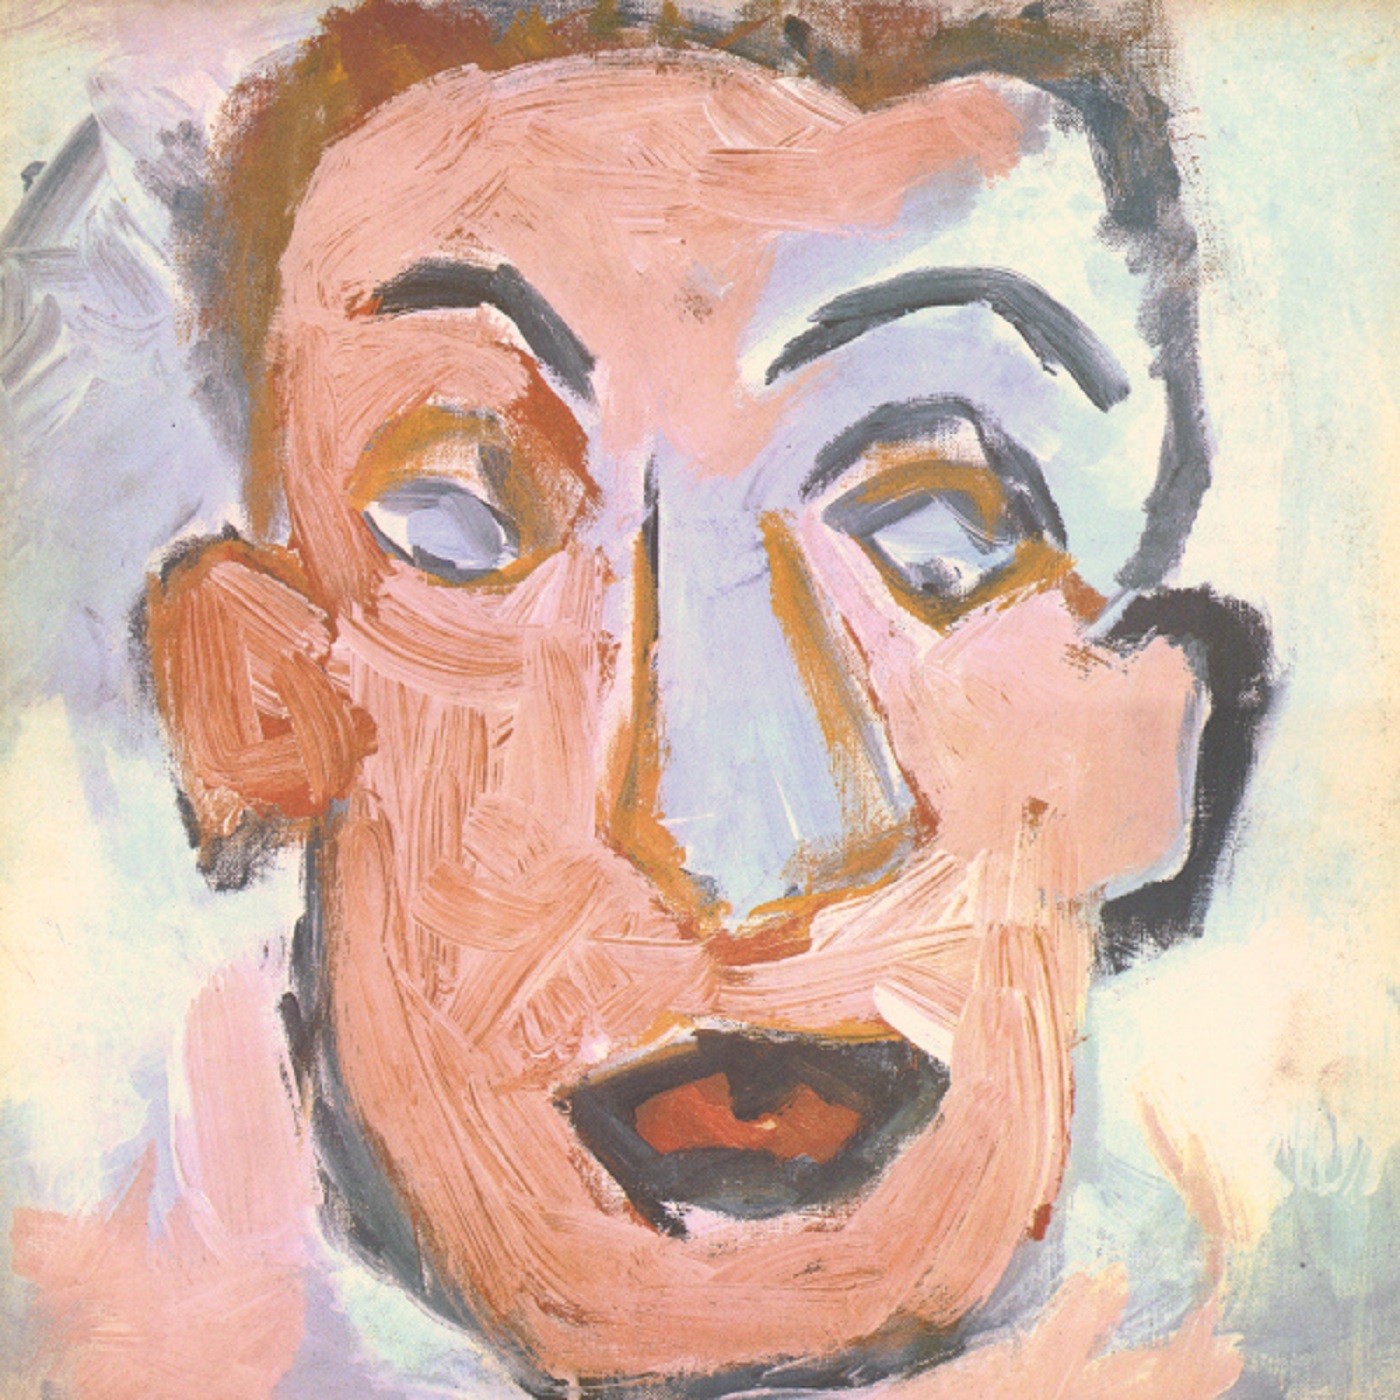 Bob Dylan's "Self Portrait" (with Dewey Paul Moffitt)